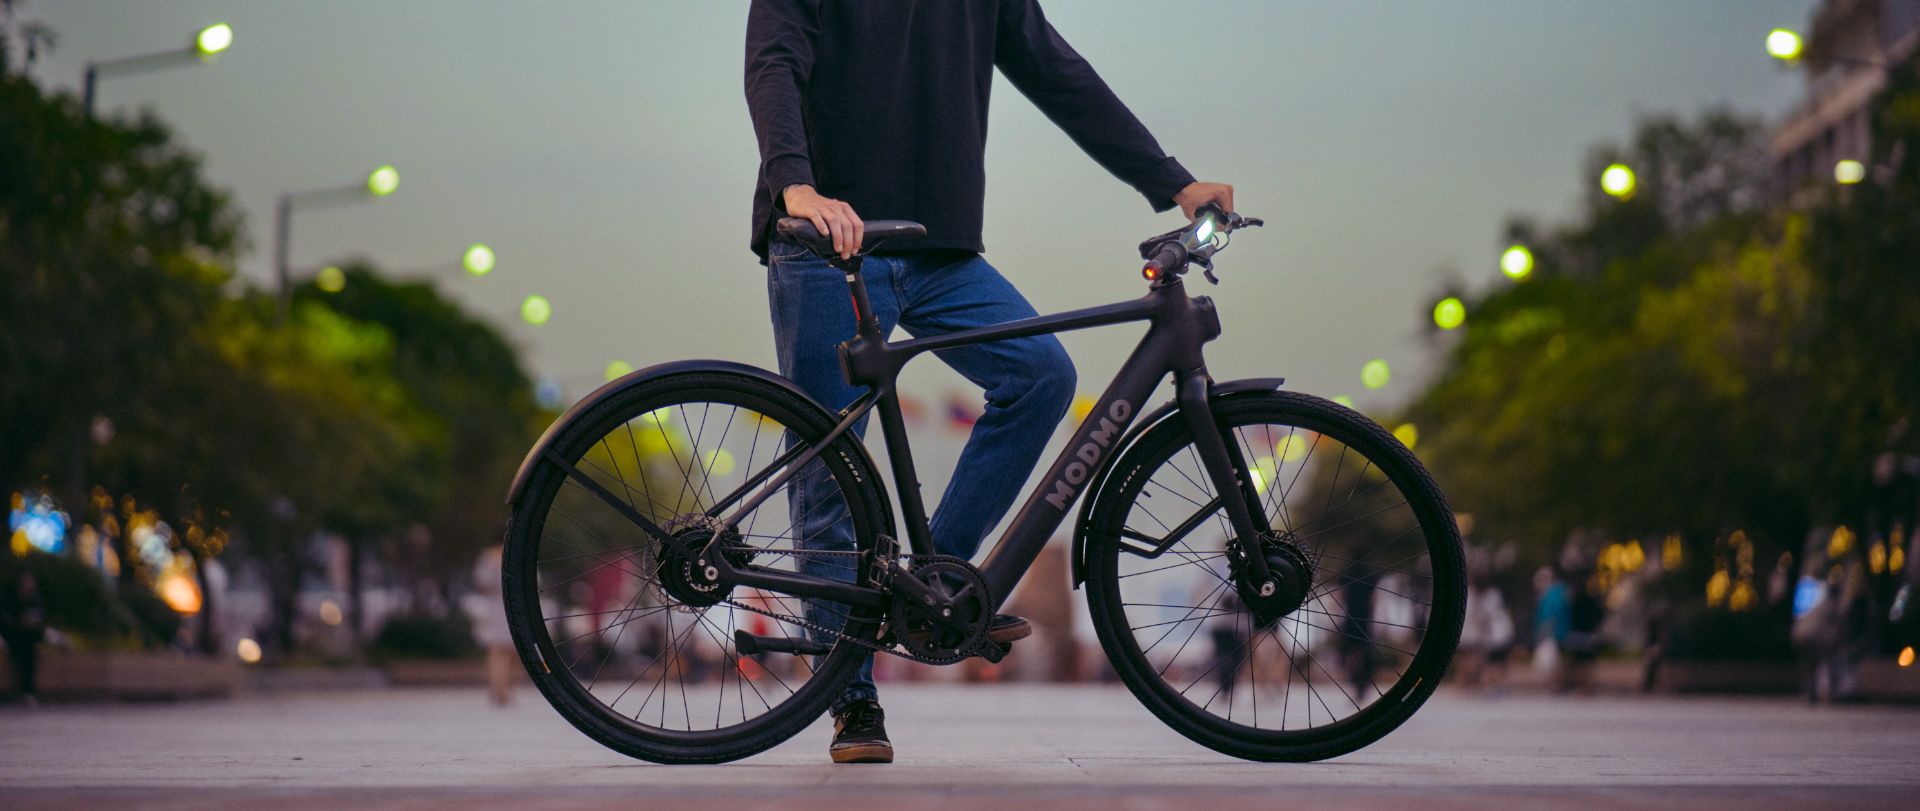 Modmo Saigon+ Electric Bicycle - RRP £2800 - Size S (Rider: 140-155cm) - Image 13 of 19